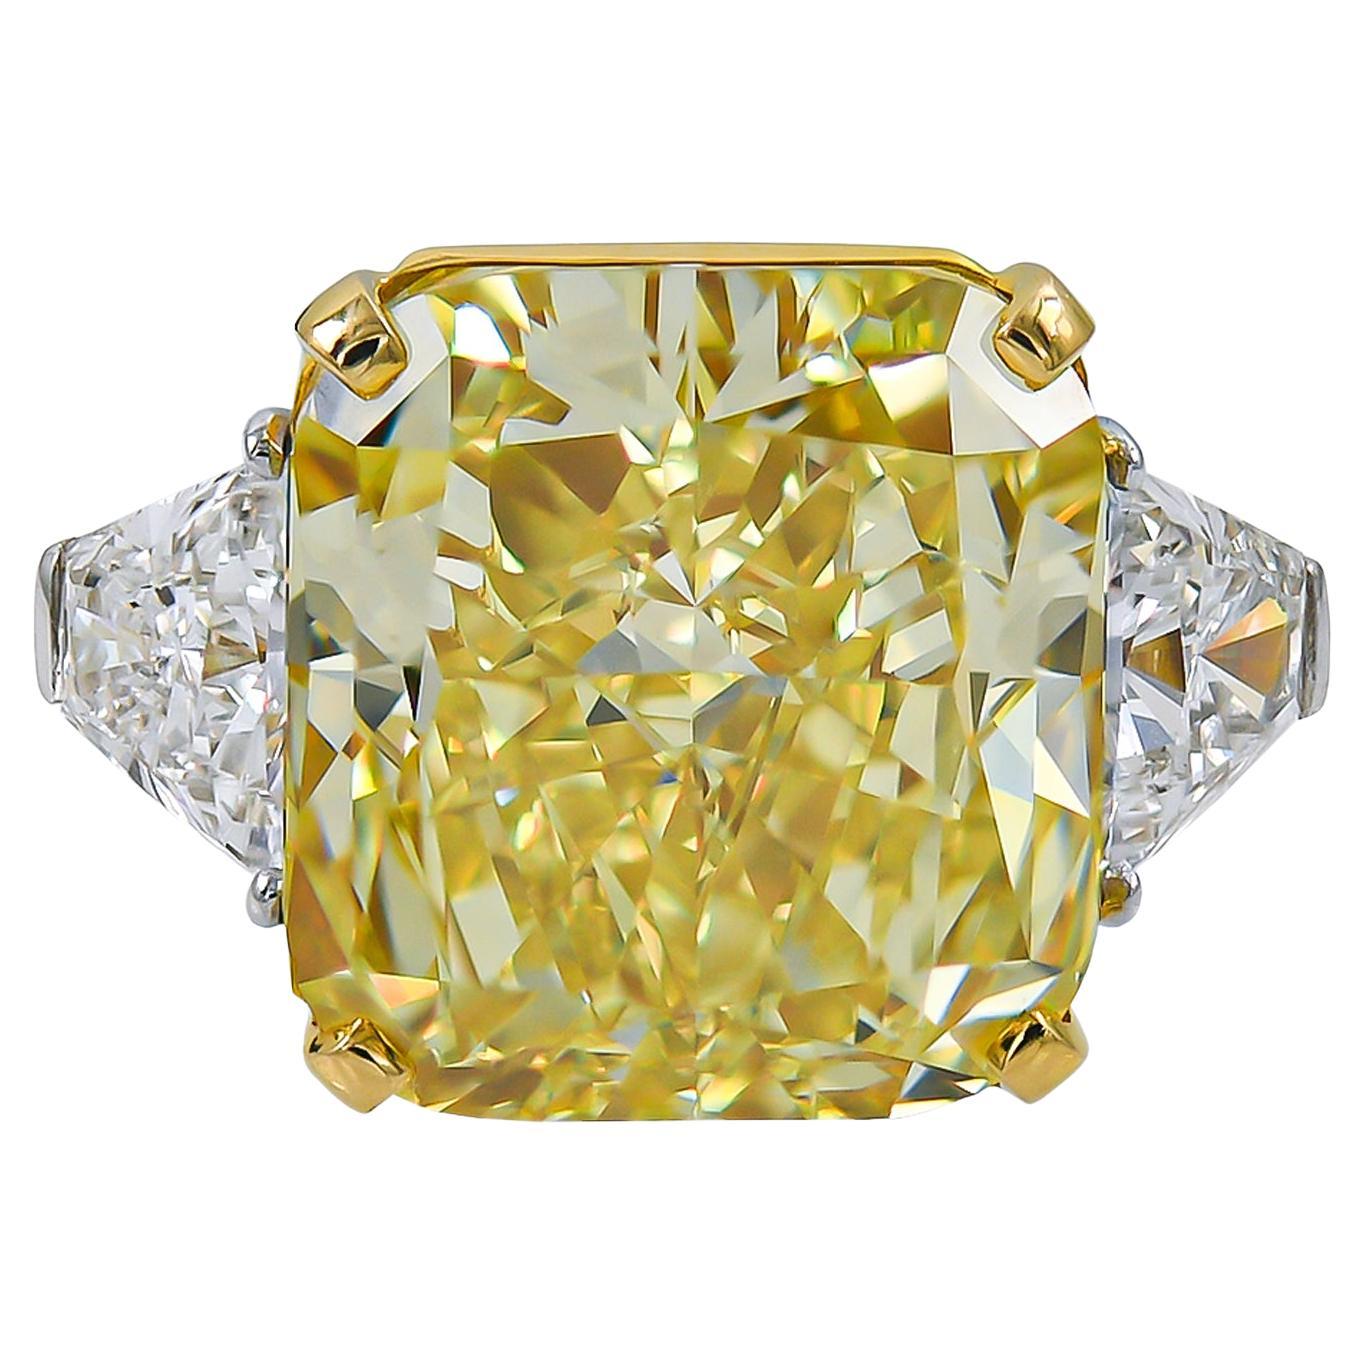 Spectra Fine Jewelry GIA Certified 22.86 Carat Fancy Vivid Yellow Diamond Ring For Sale